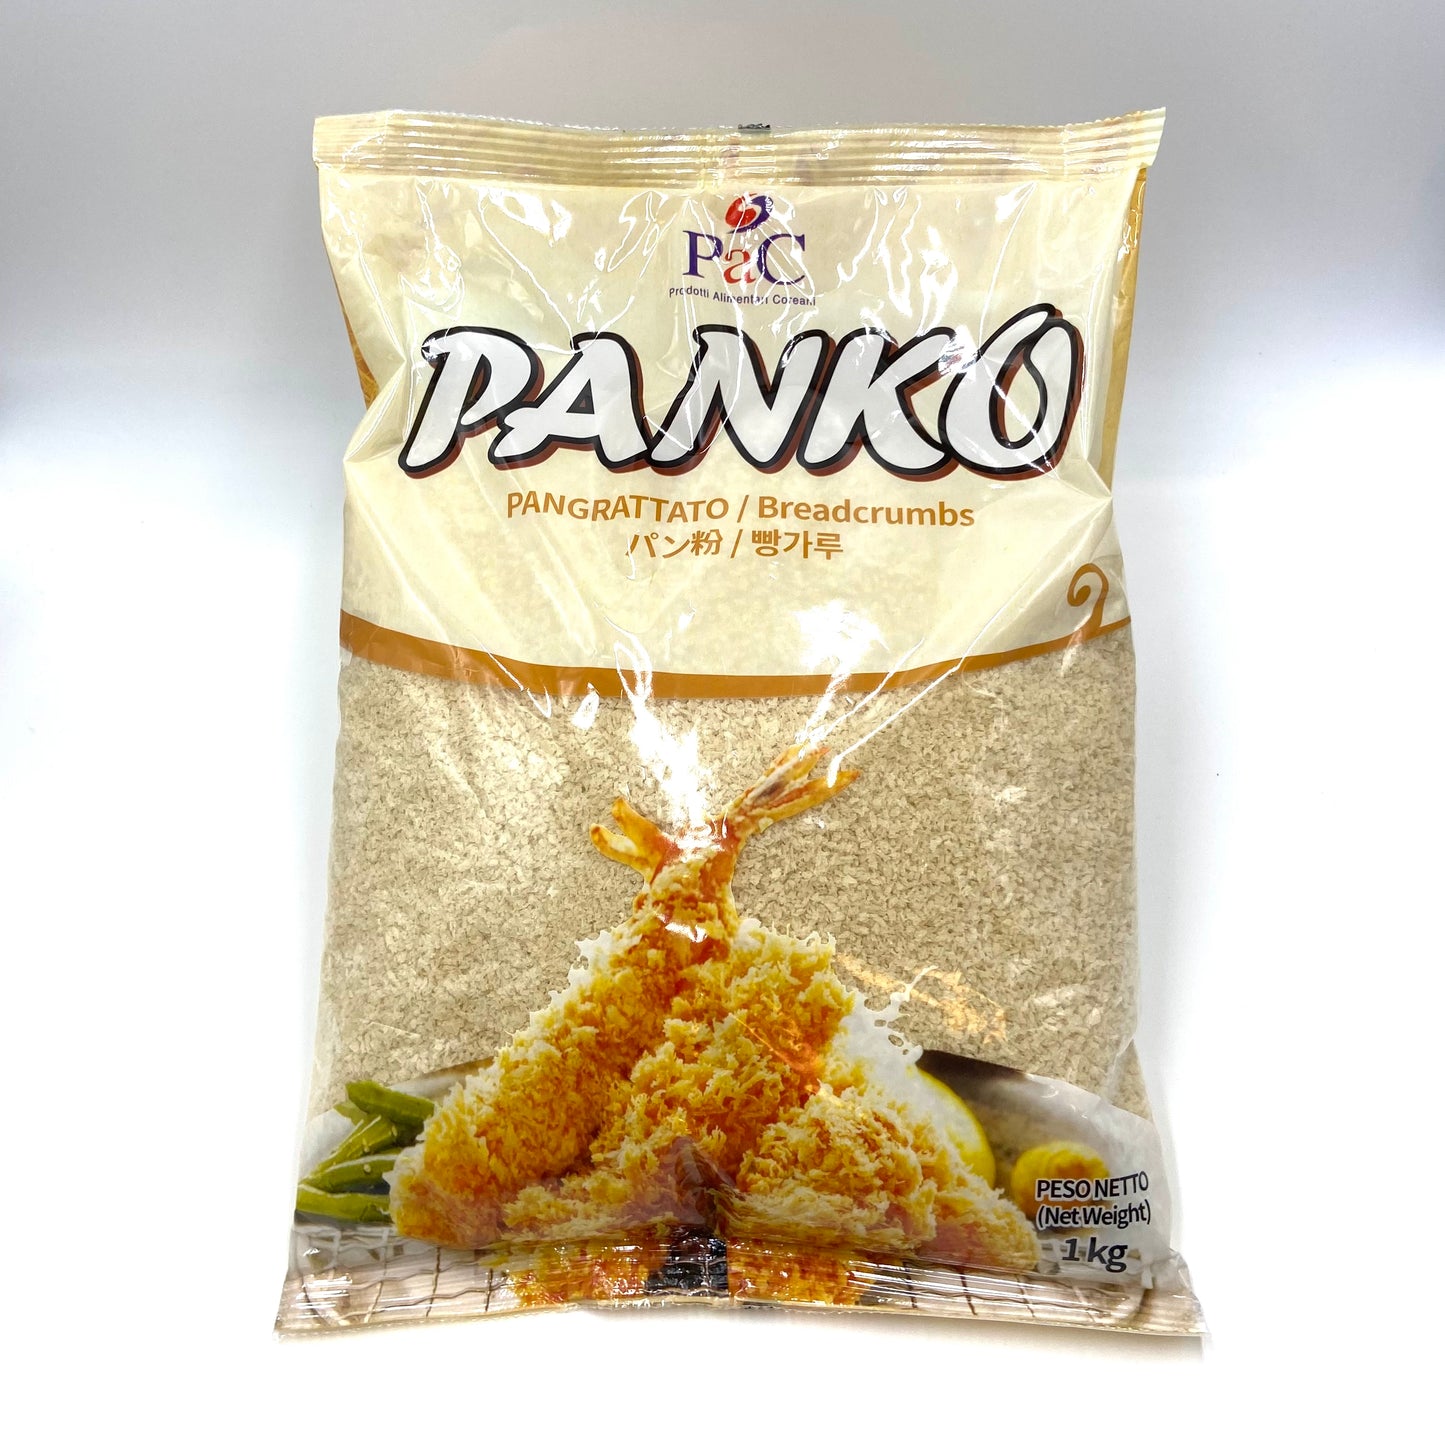 PAC Panko 1kg